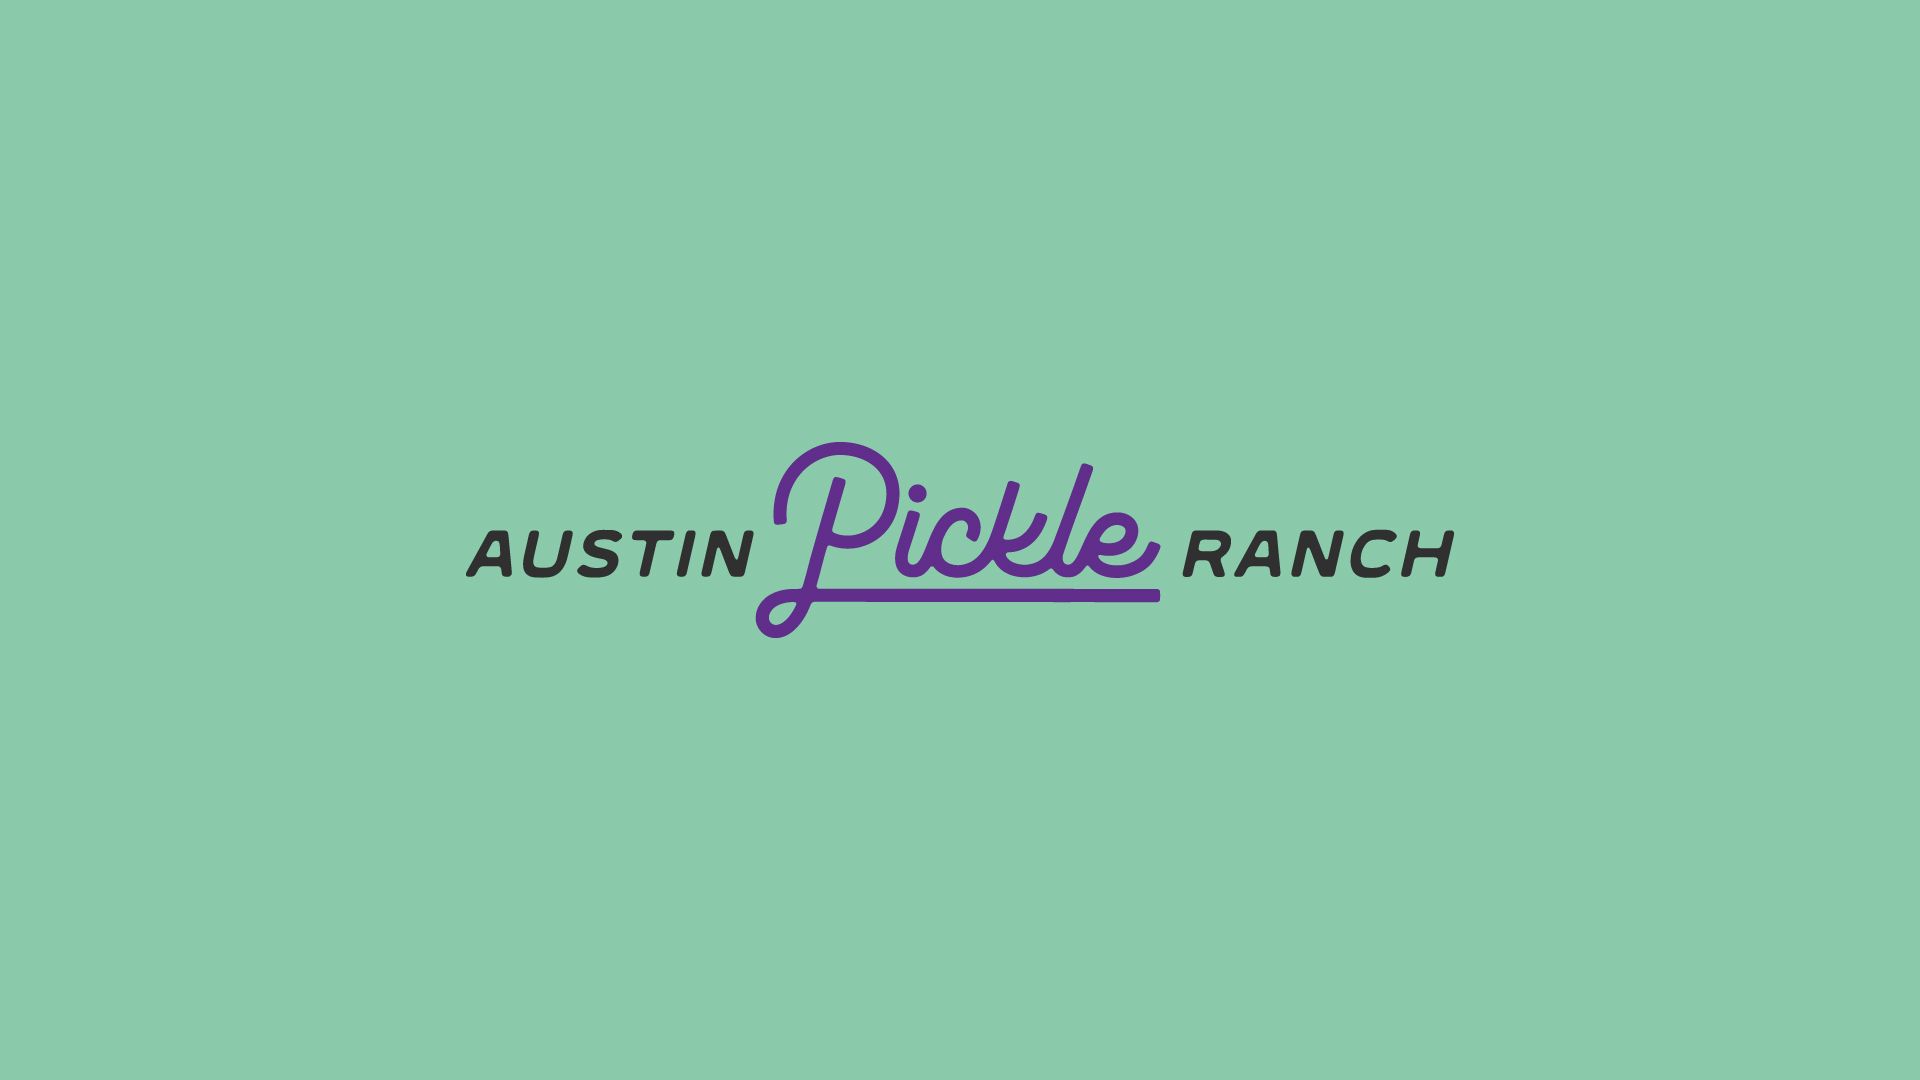 Austin Pickle Ranch